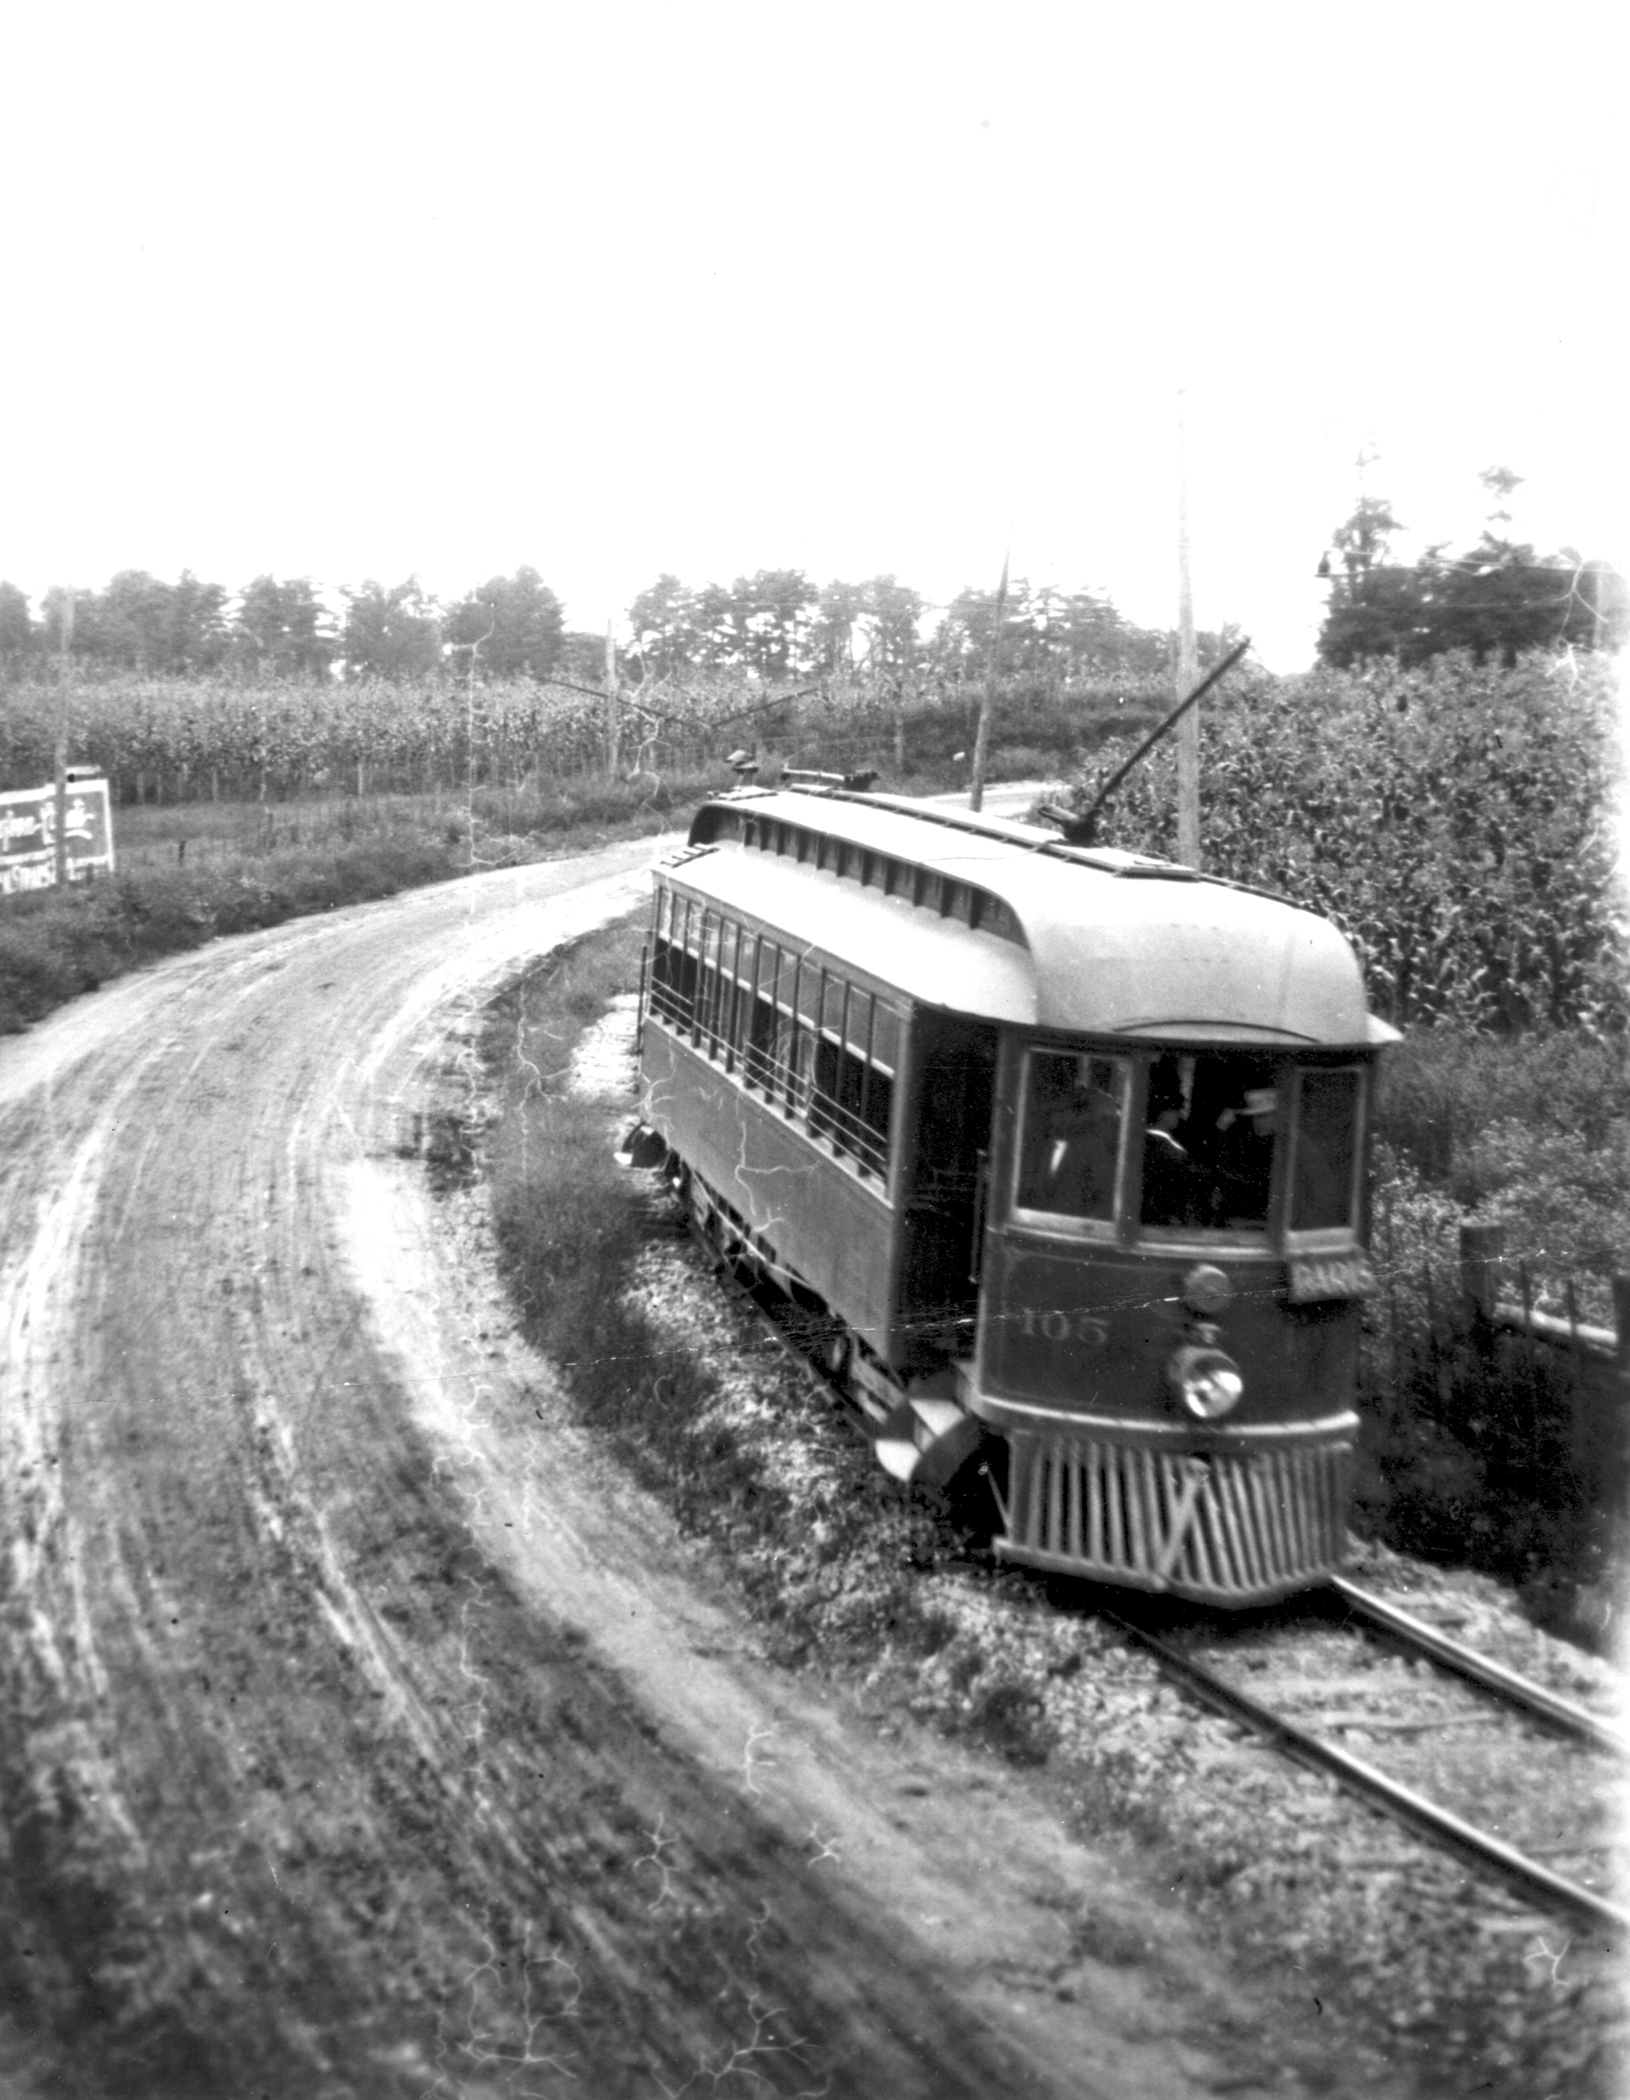 Trolley on its rails beside a dirt road.